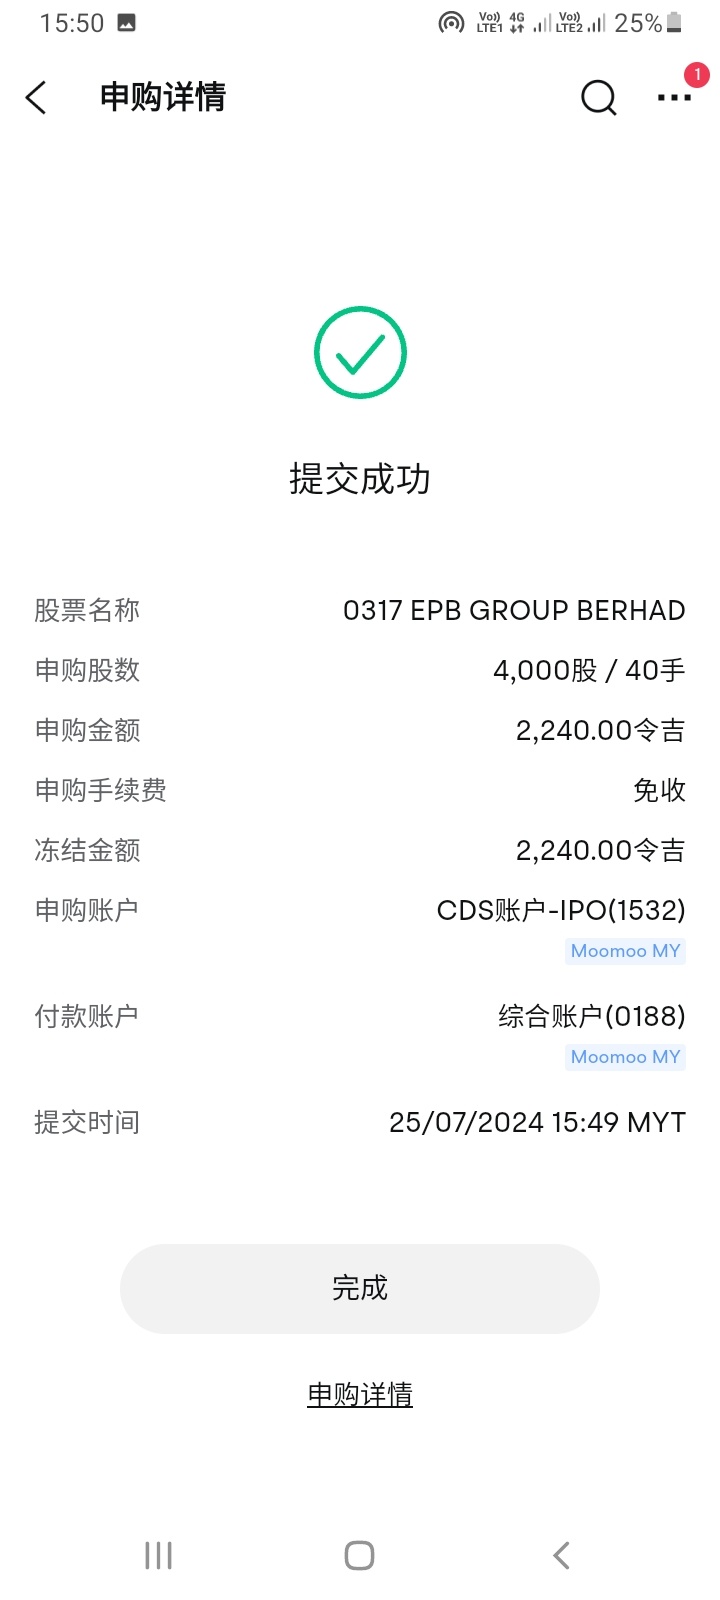 $EPB Group Berhad (0317.MY)$